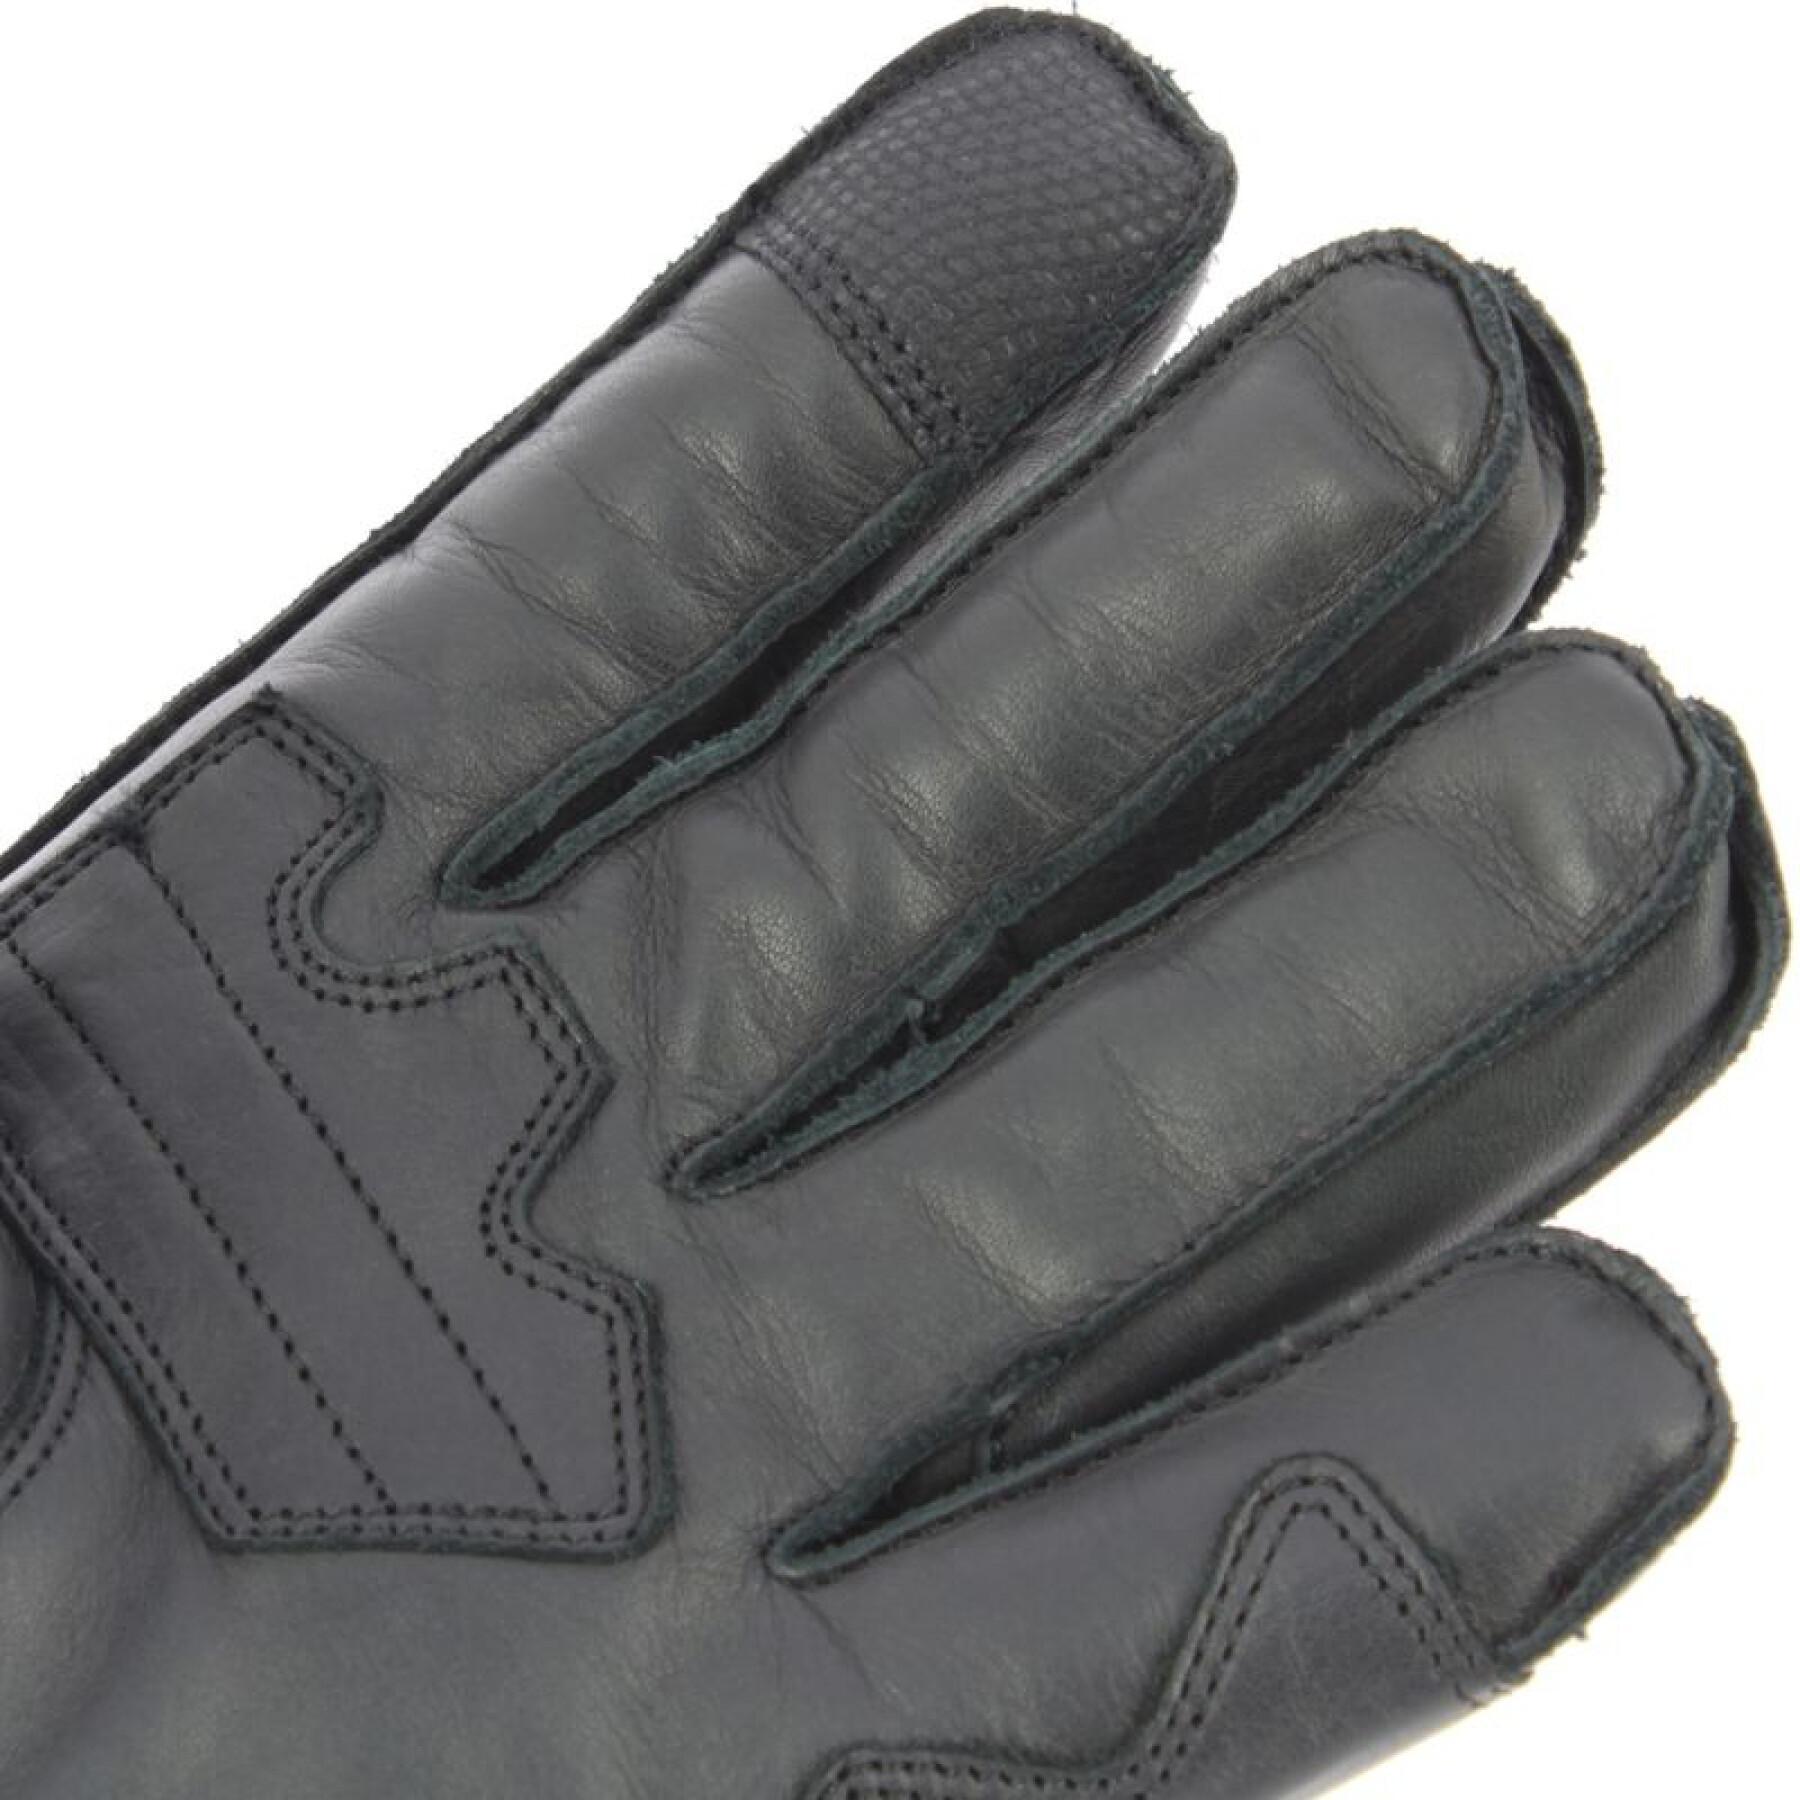 Winter motorcycle gloves Motomod Heby